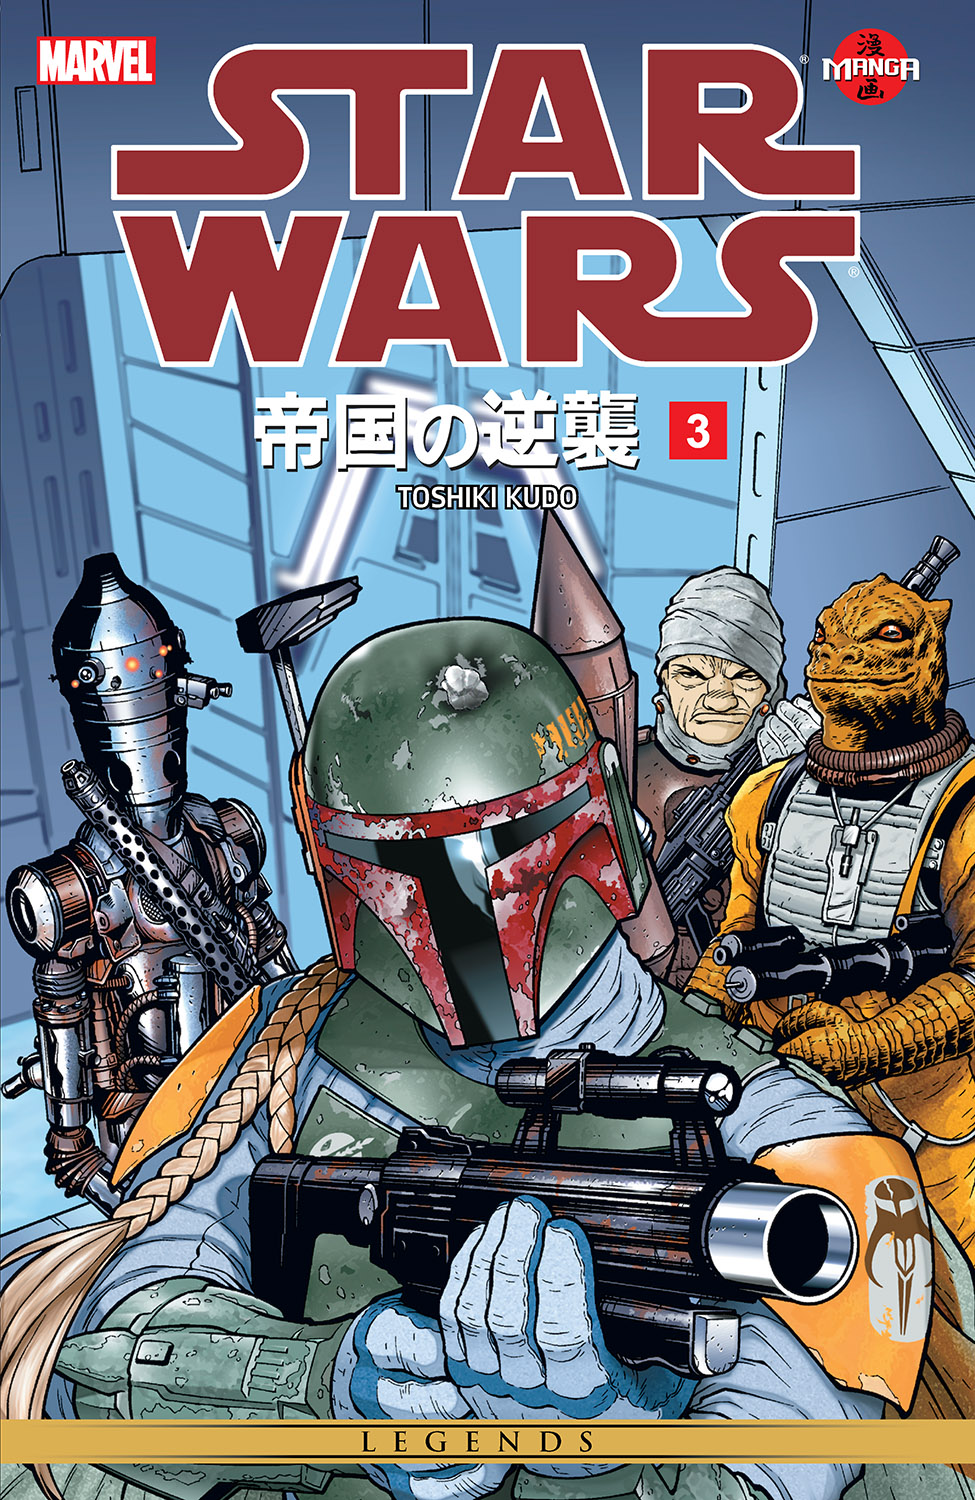 Star Wars: The Empire Strikes Back Manga (1999) #3